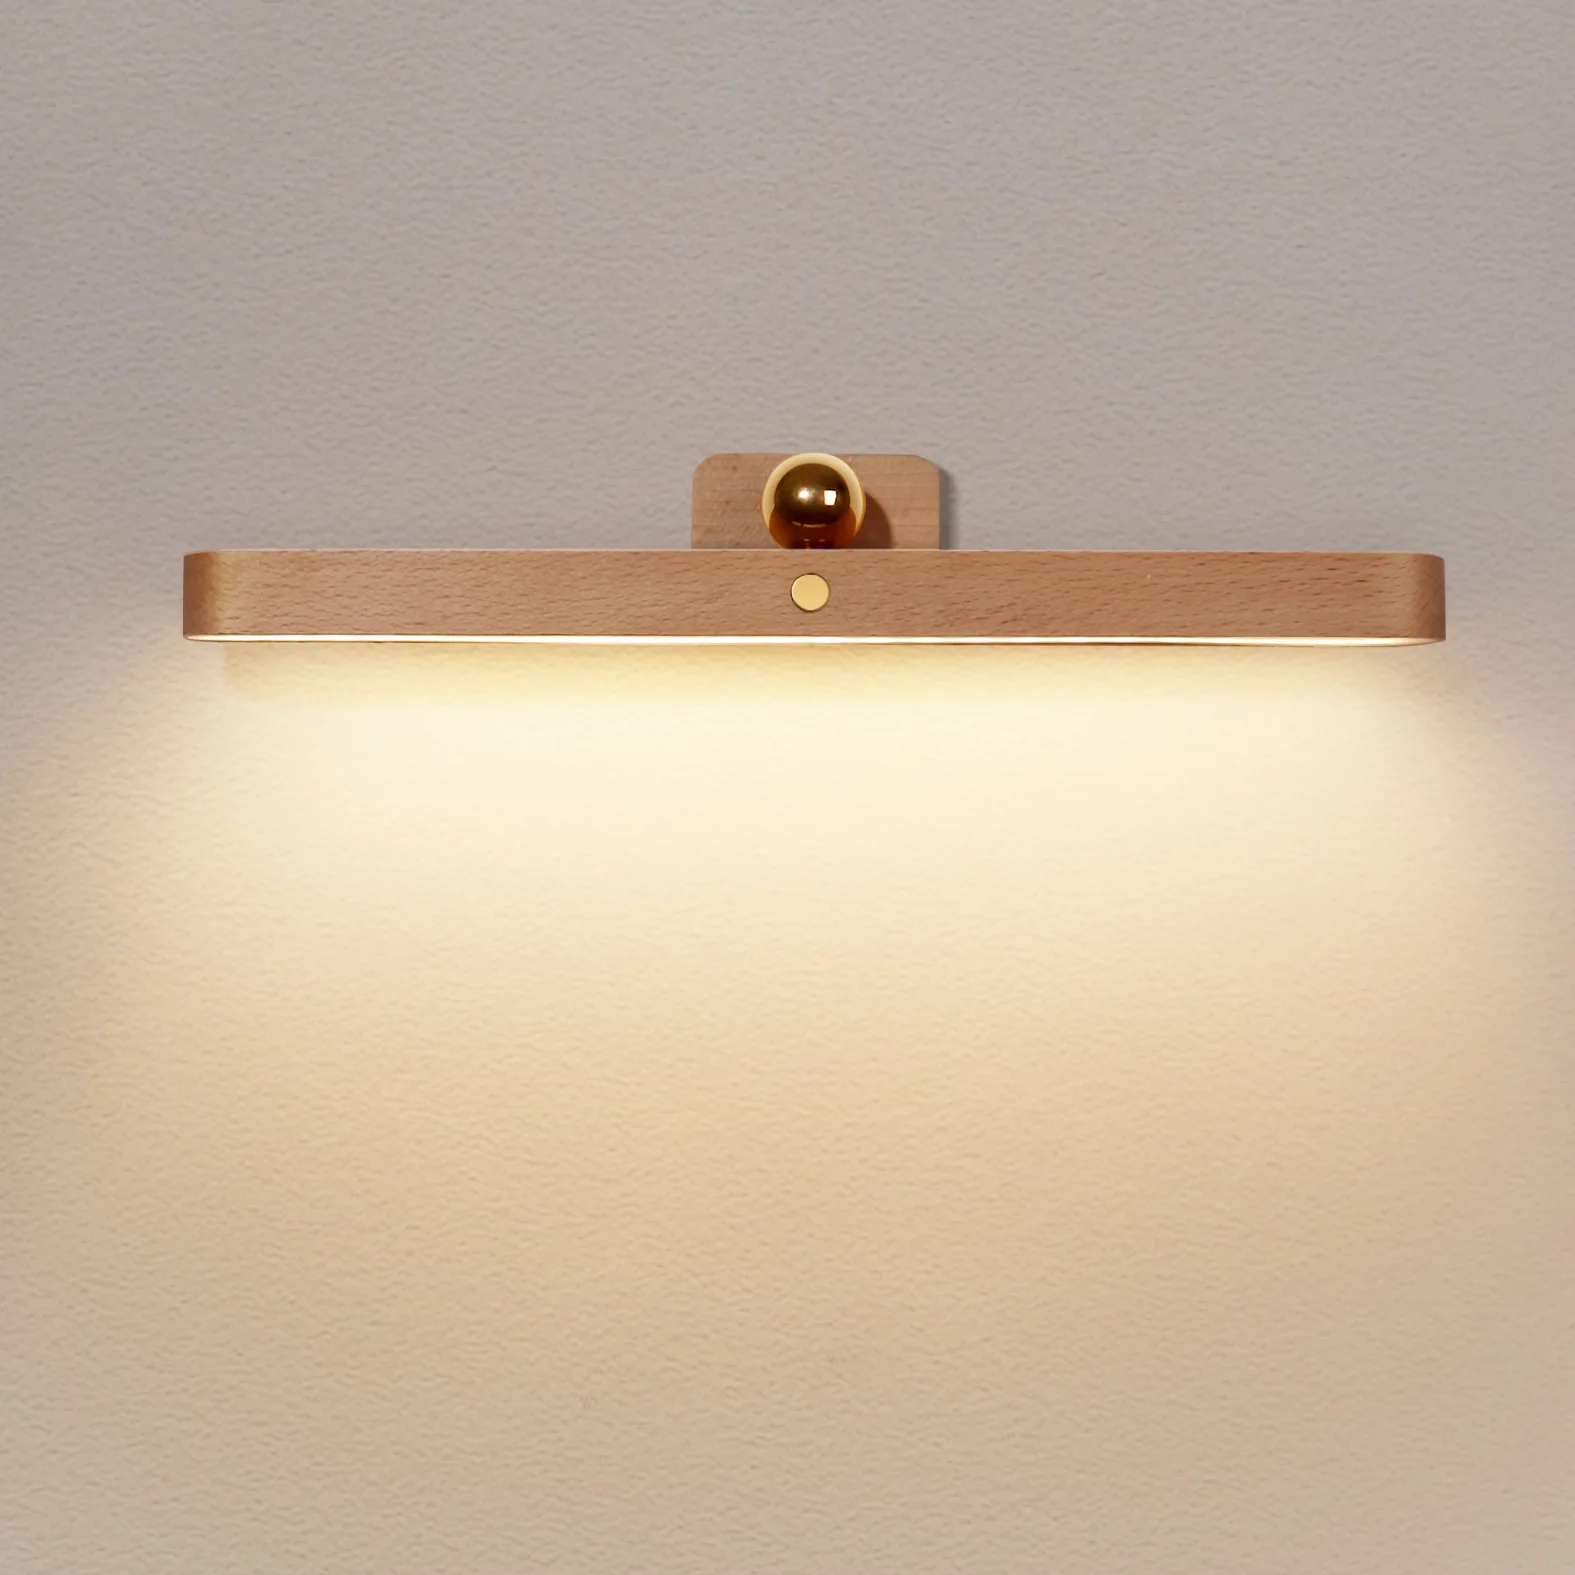 Luz LED de relleno frontal para espejo de madera, lámpara de pared magnética recargable, portátil, móvil, lámpara de noche para dormitorio